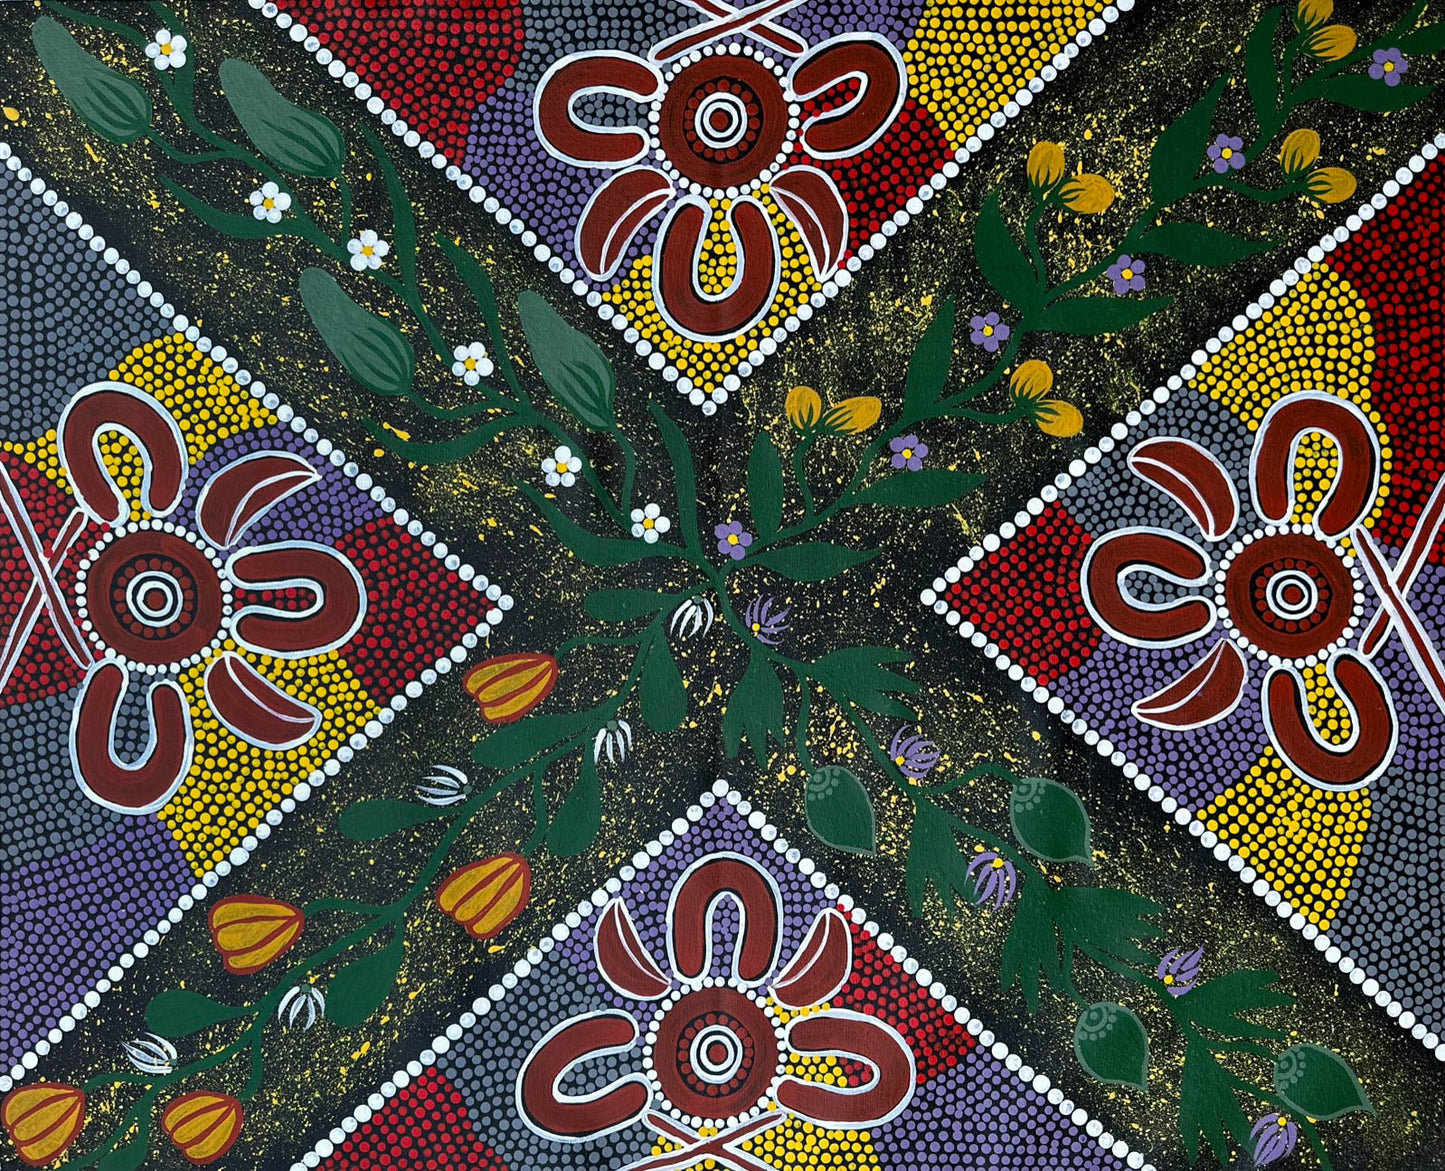 Linda Nakamarra Quinn + Bush Wild Passionfruit + Indigenous Art + Aboriginal Art + Indigenous Art + Australian Art + Dot Art Painting + Darwin Based Gallery + Contemporary Traditional Art Painting + Iconography + Symbolism + Art Story + Interior Design + Culture